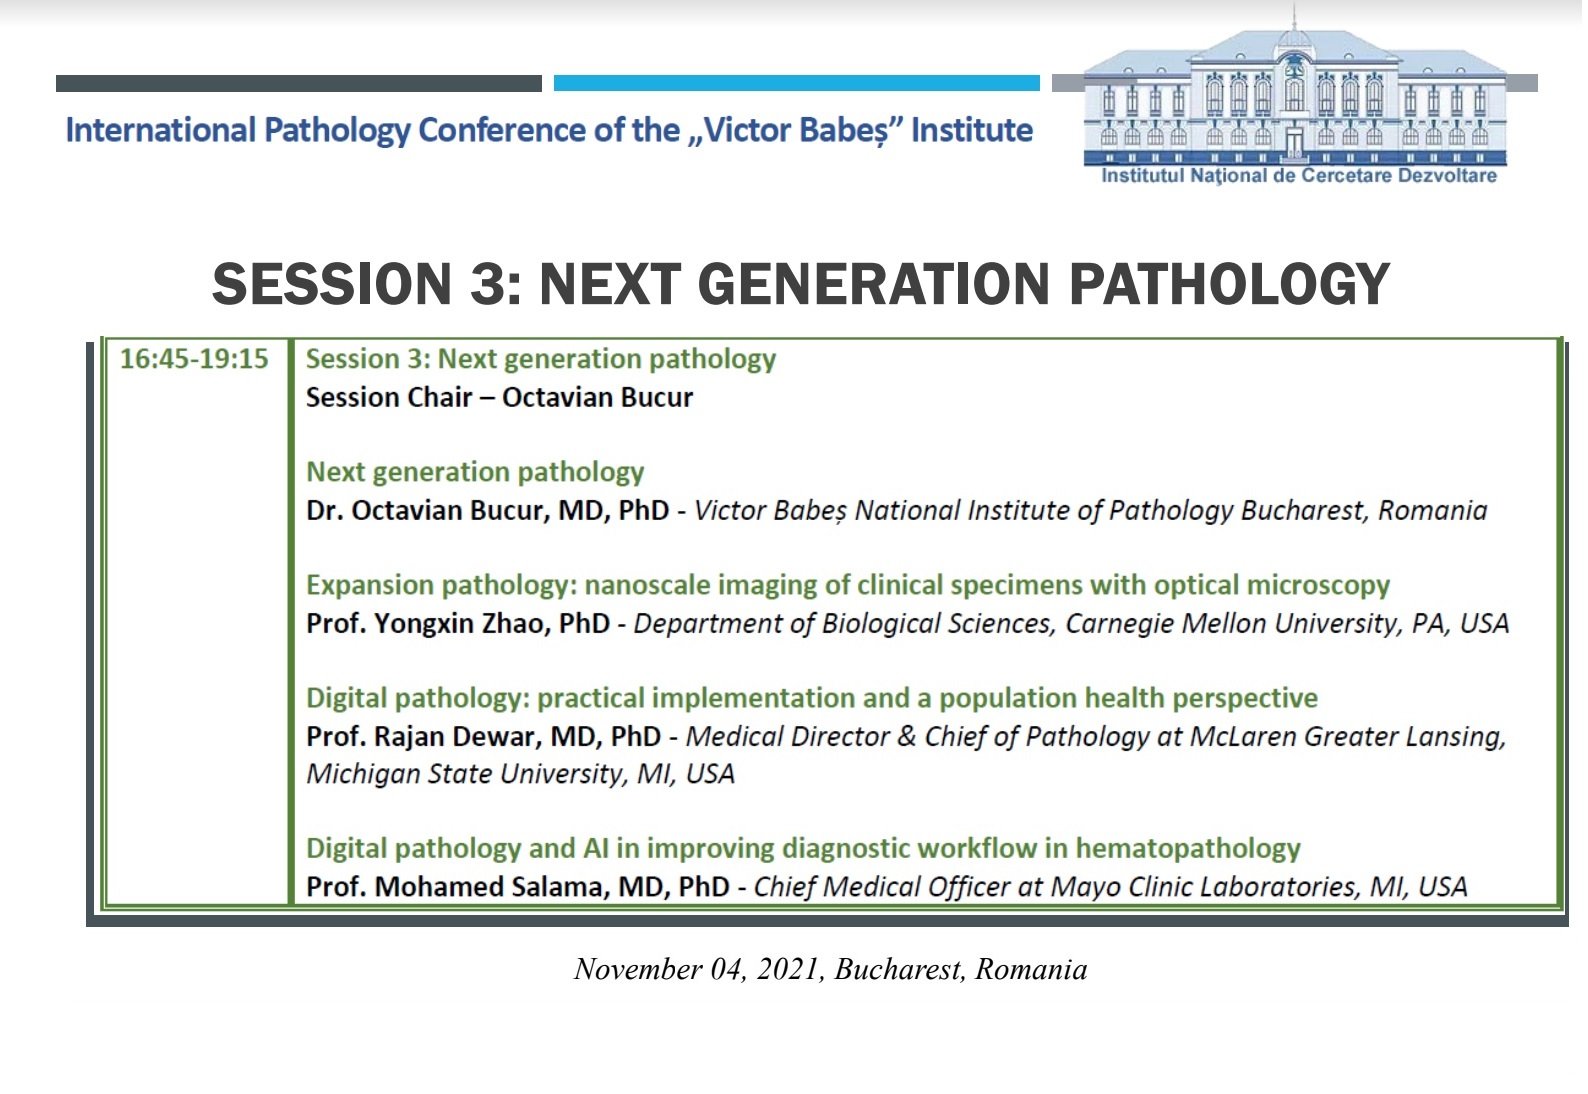 Next Generation Pathology session, International Pathology Conference of the Victor Babes Institute